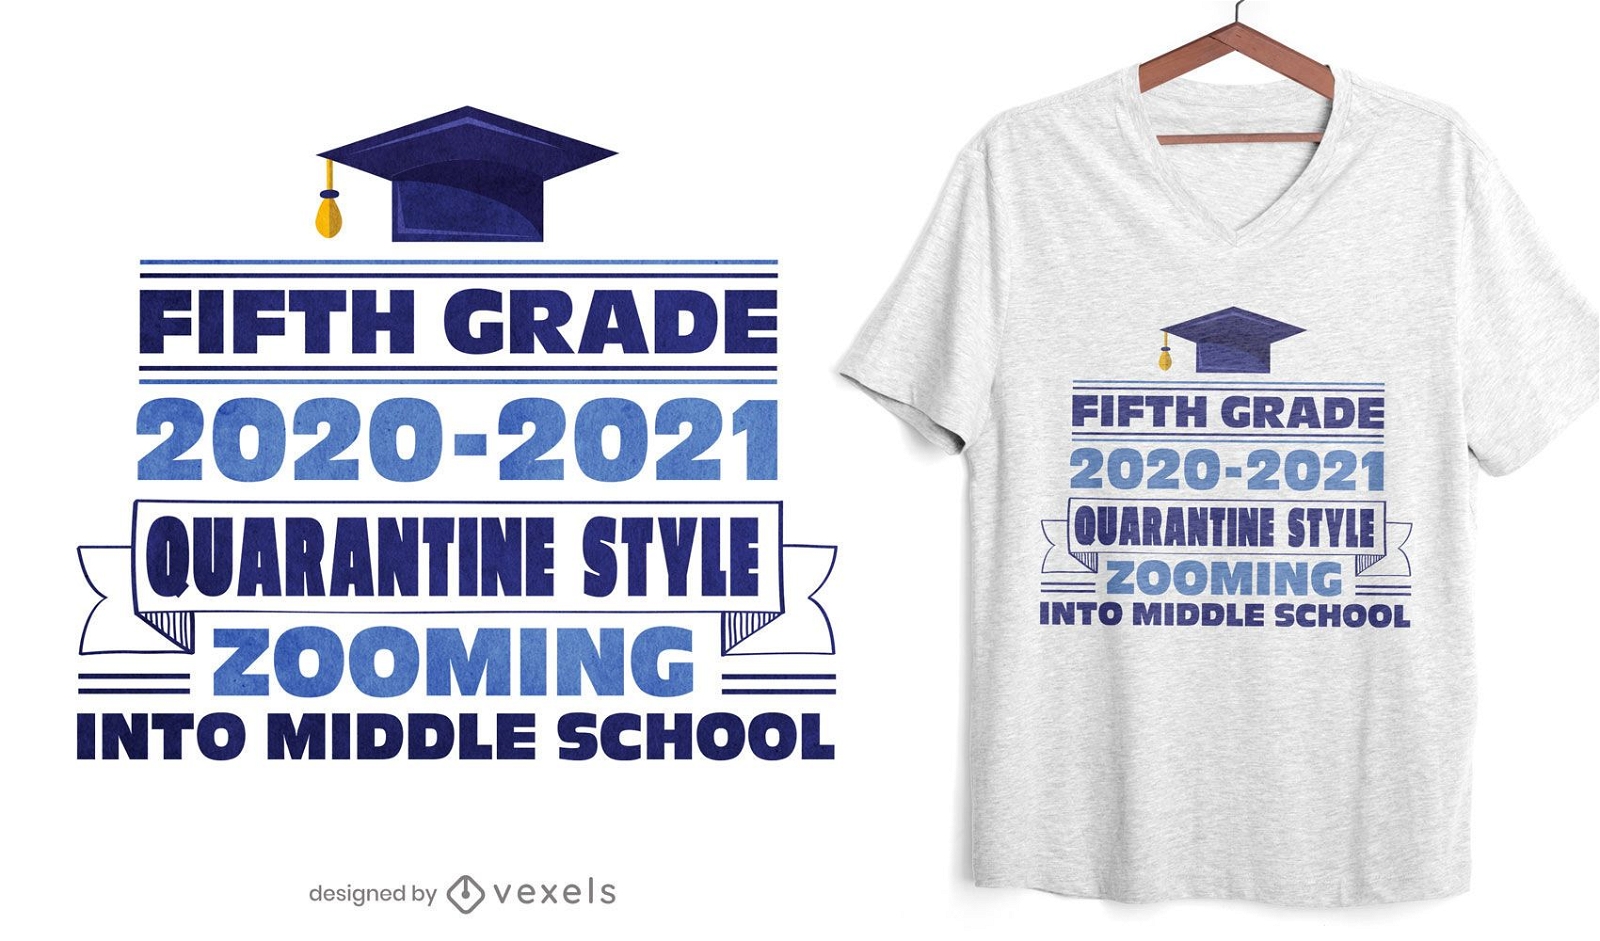 Fifth grade quarantine style t-shirt design